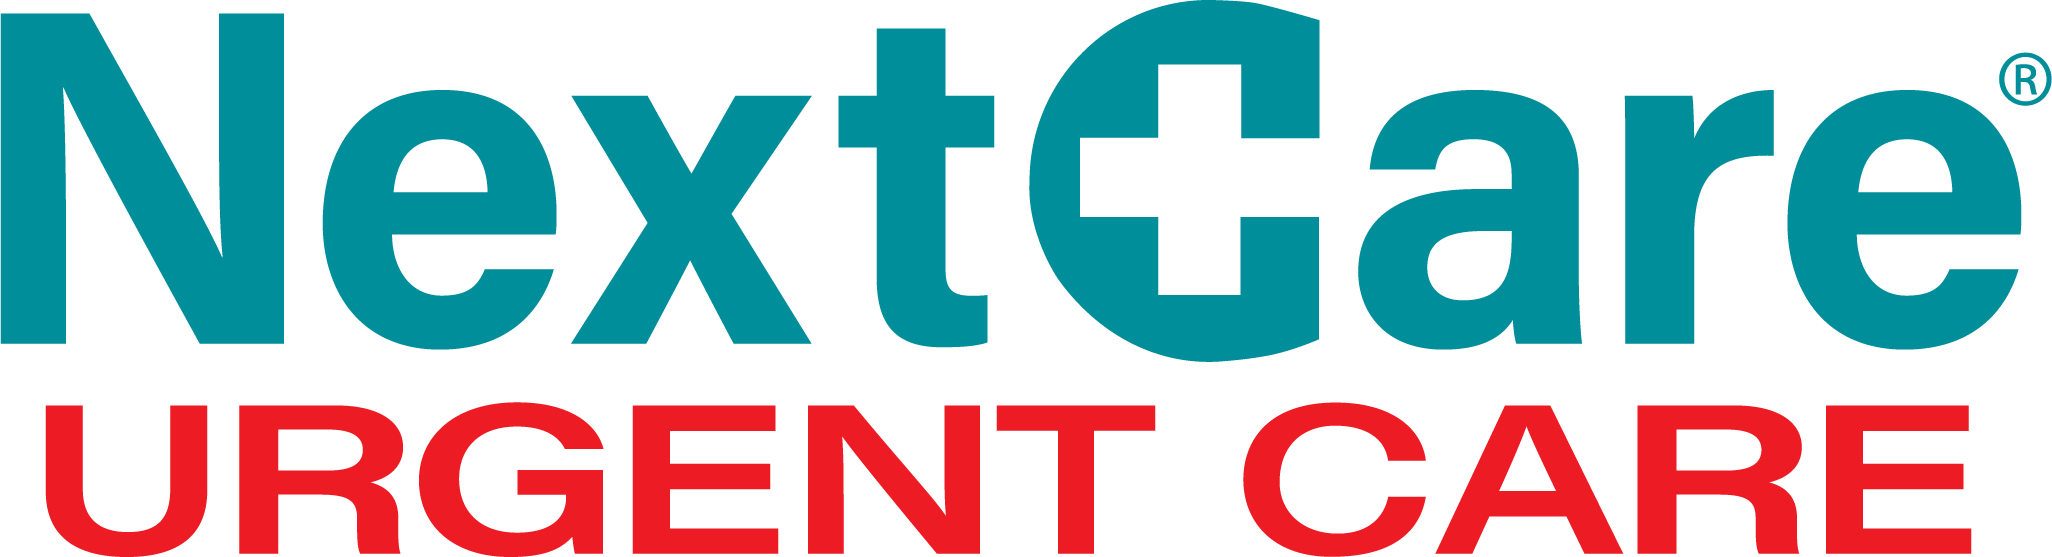 NextCare Urgent Care - Higley Logo